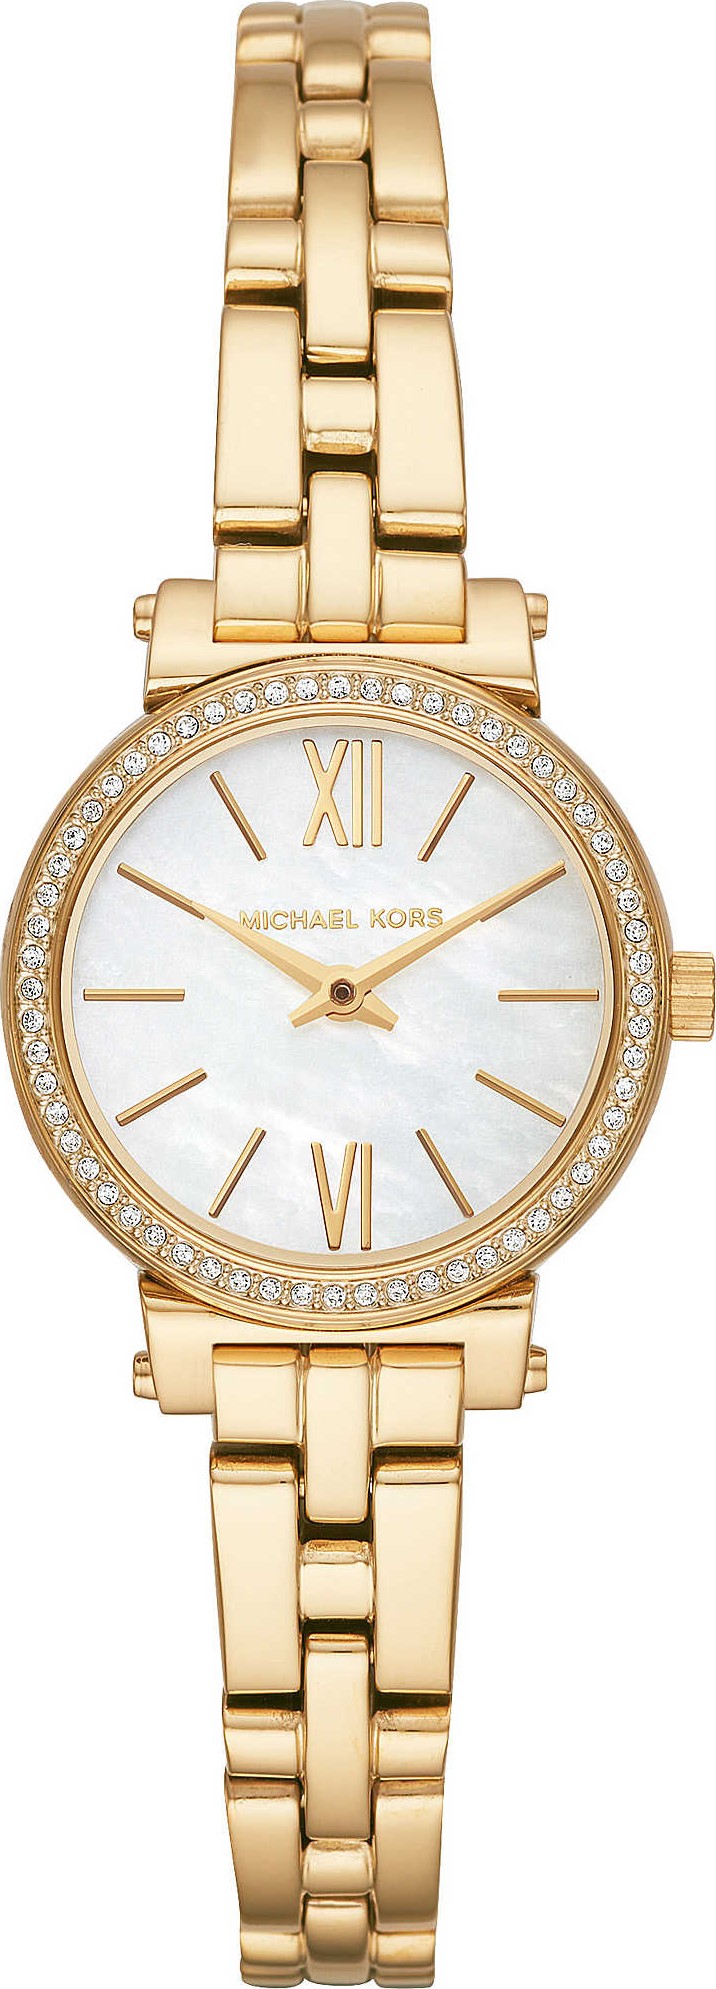 Michael Kors MK3833 Sofie Gold-Tone Watch 26mm